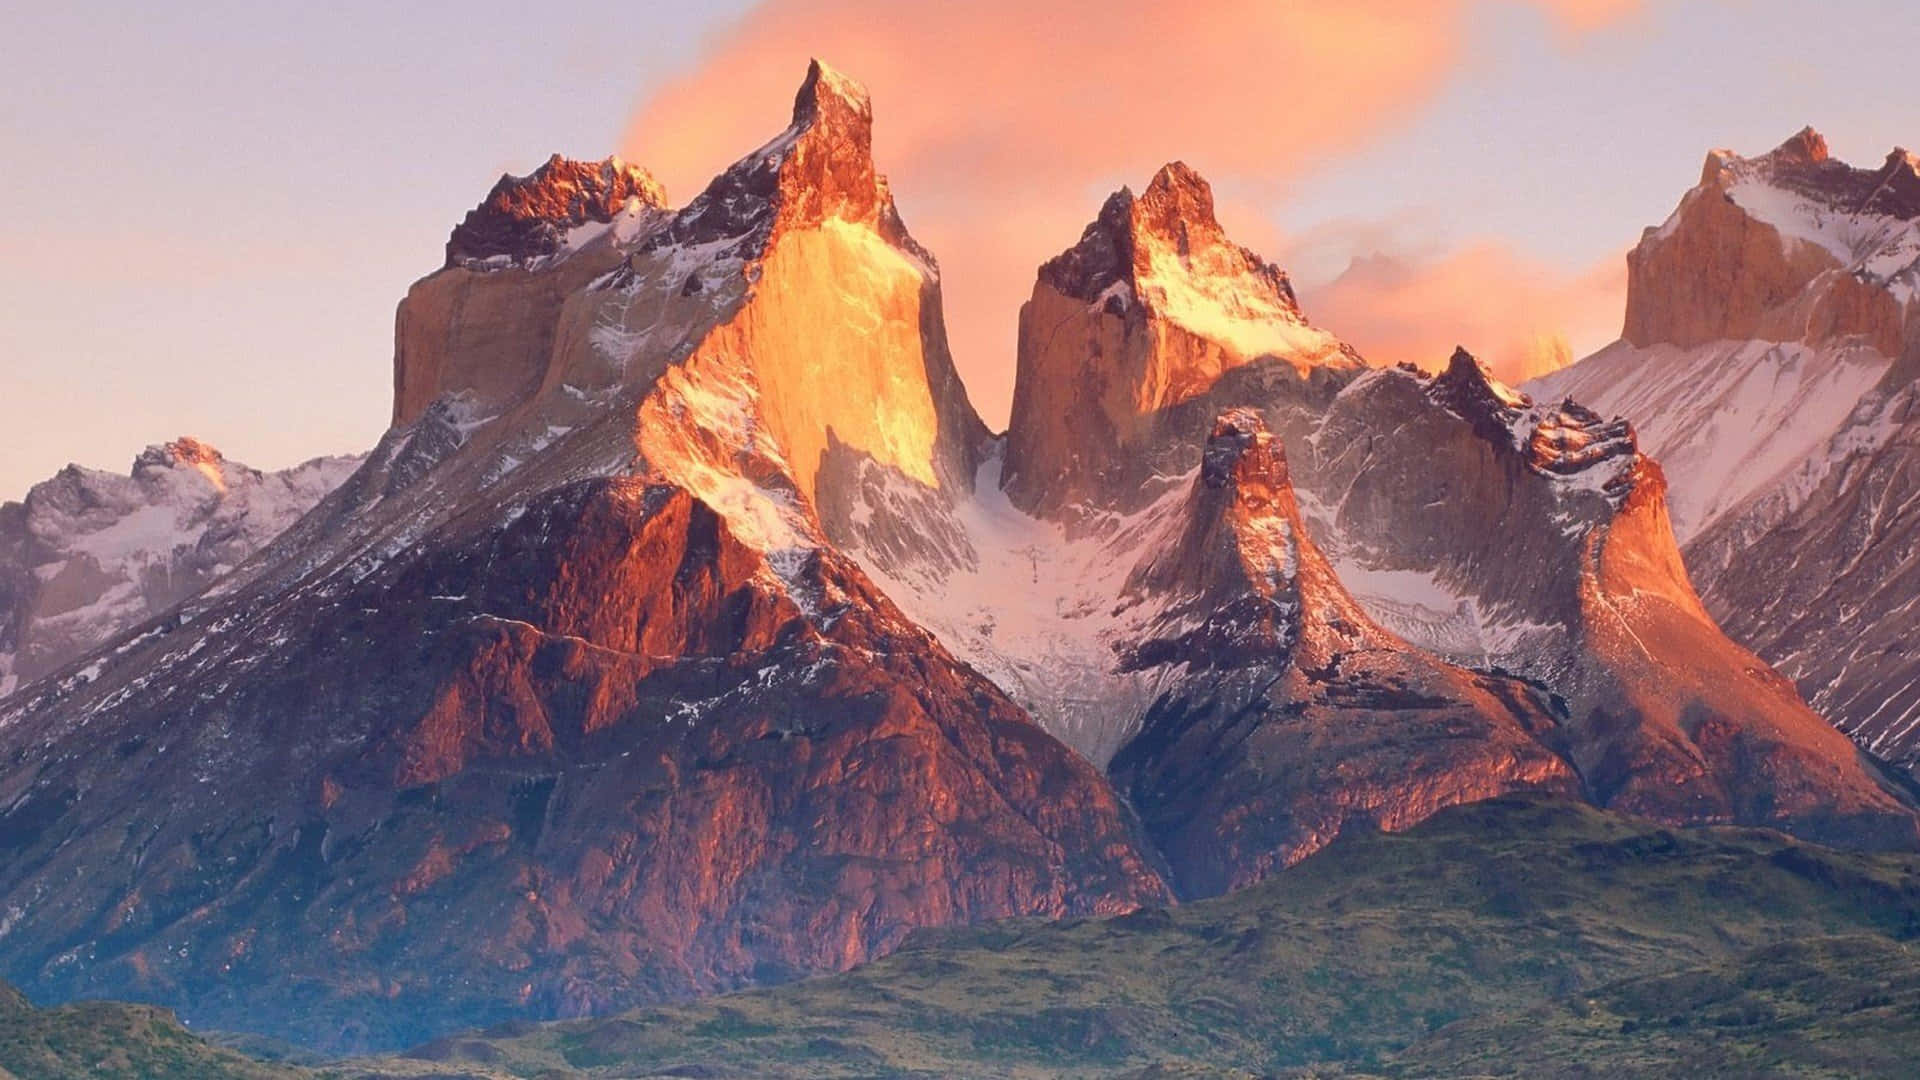 Exploring the lush landscape of Patagonia